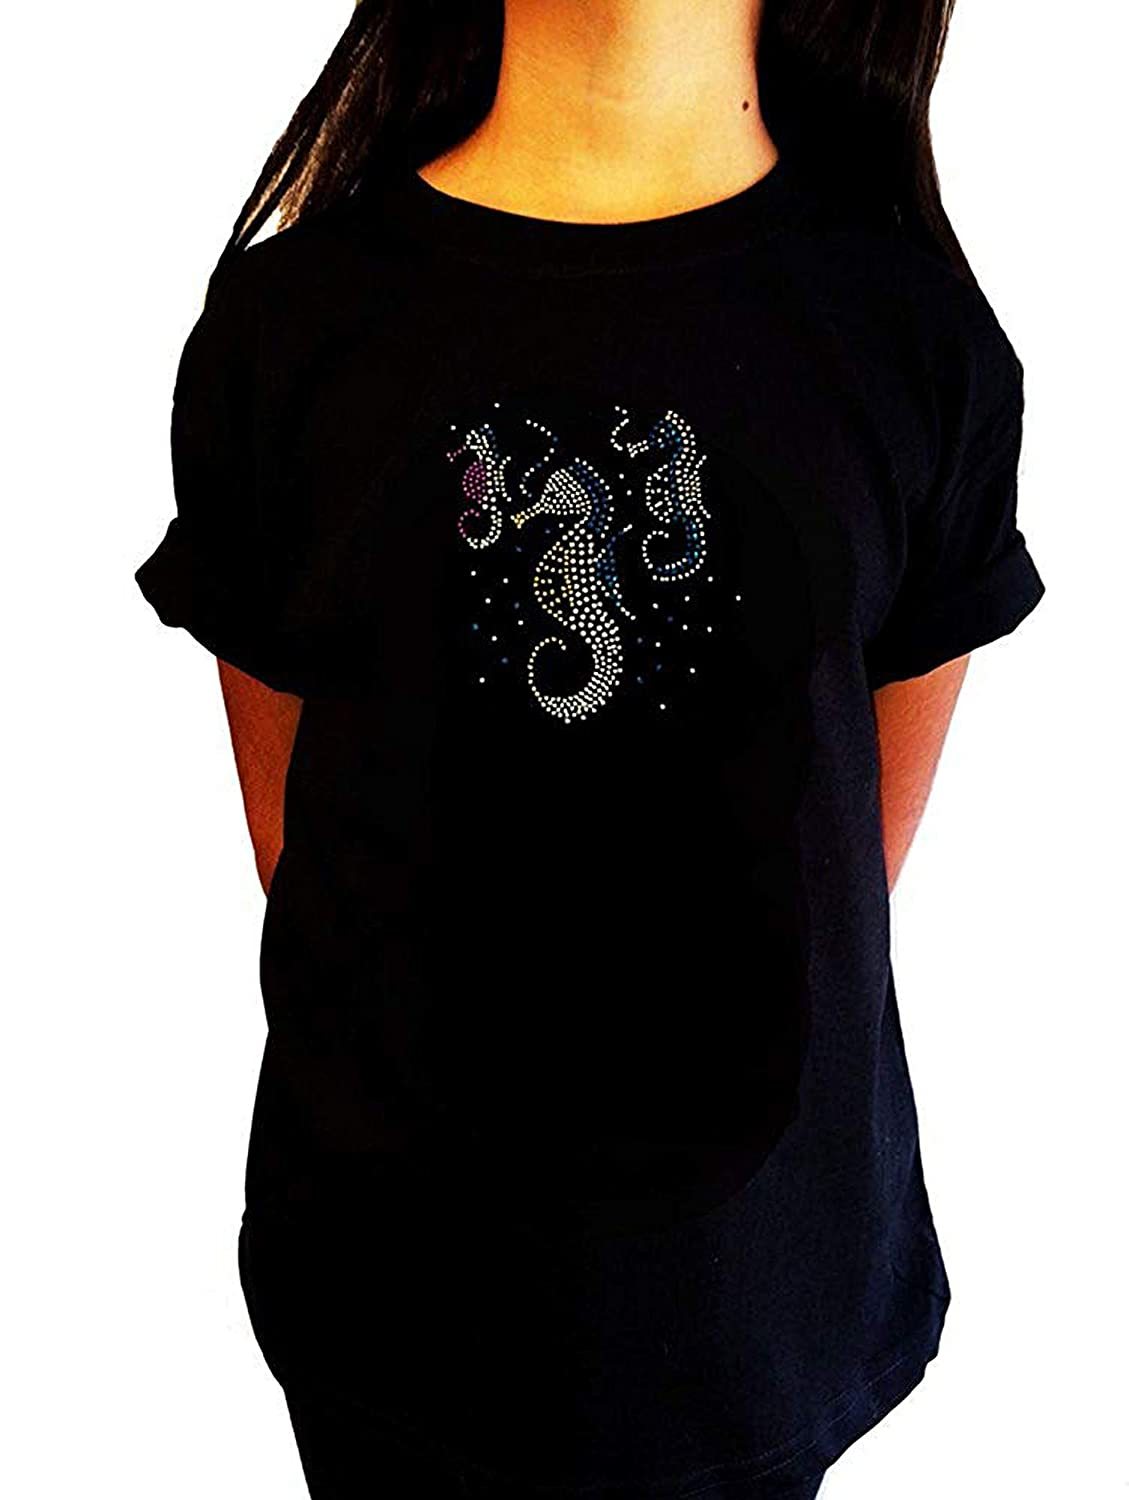 Girls Rhinestone T-Shirt " Colorful Seahorses " Sizes 3 to 14 Available